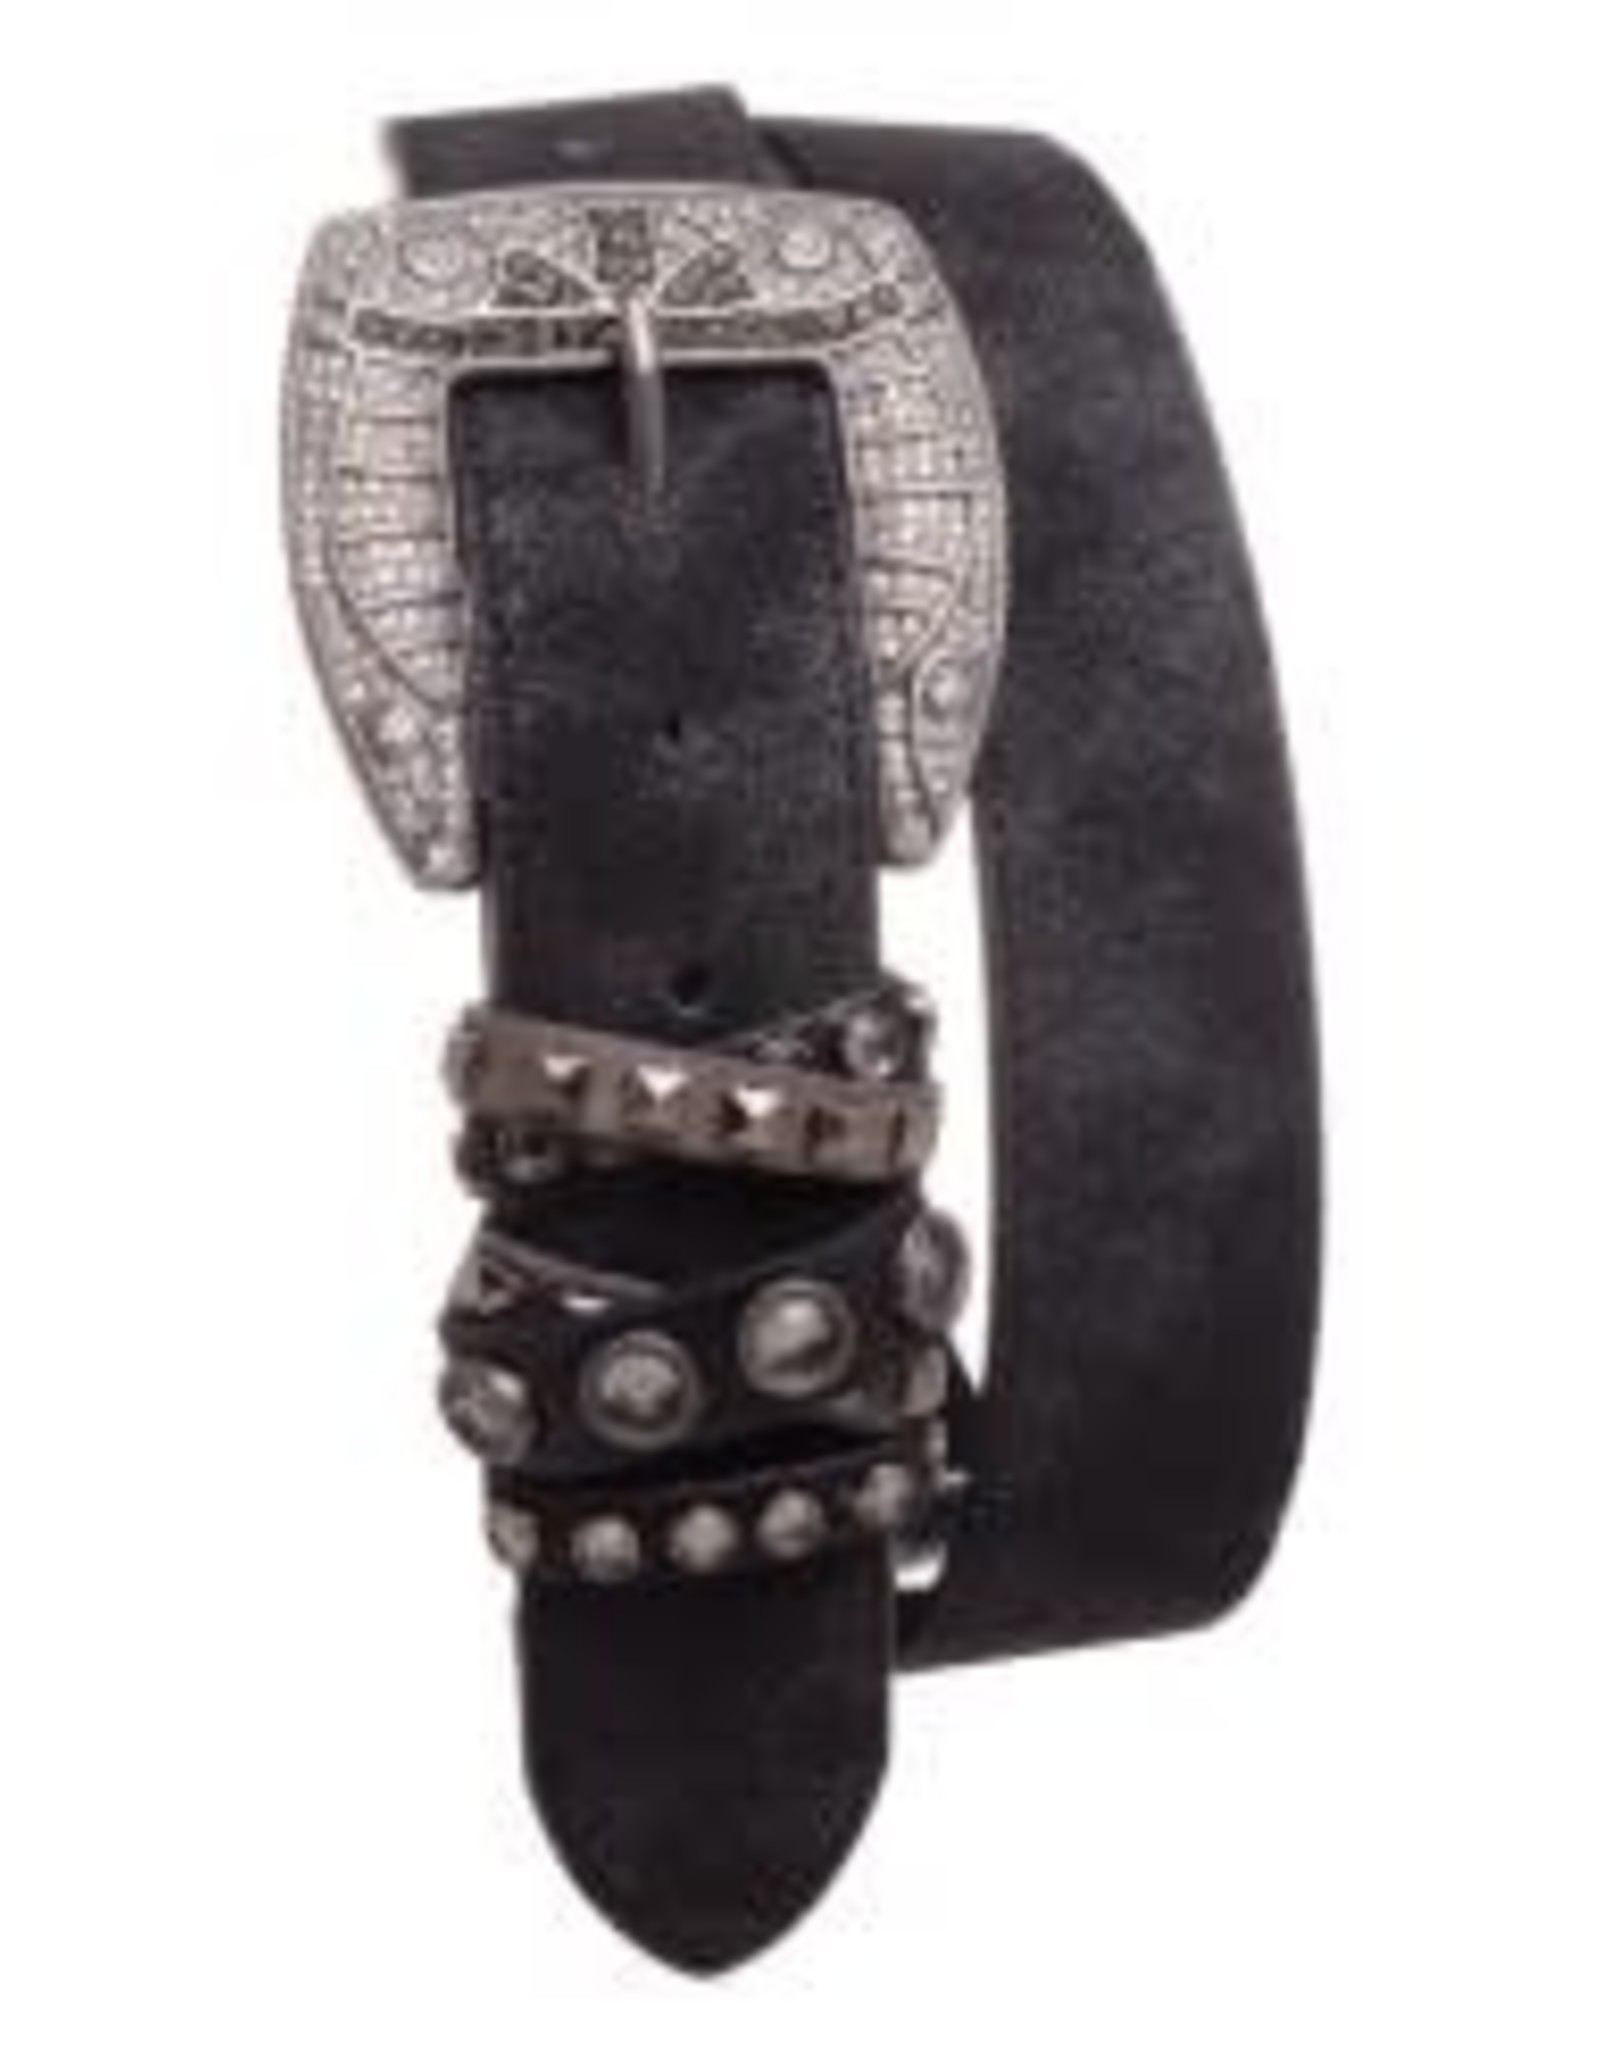 Rhinestone Studded Leather buckle belt